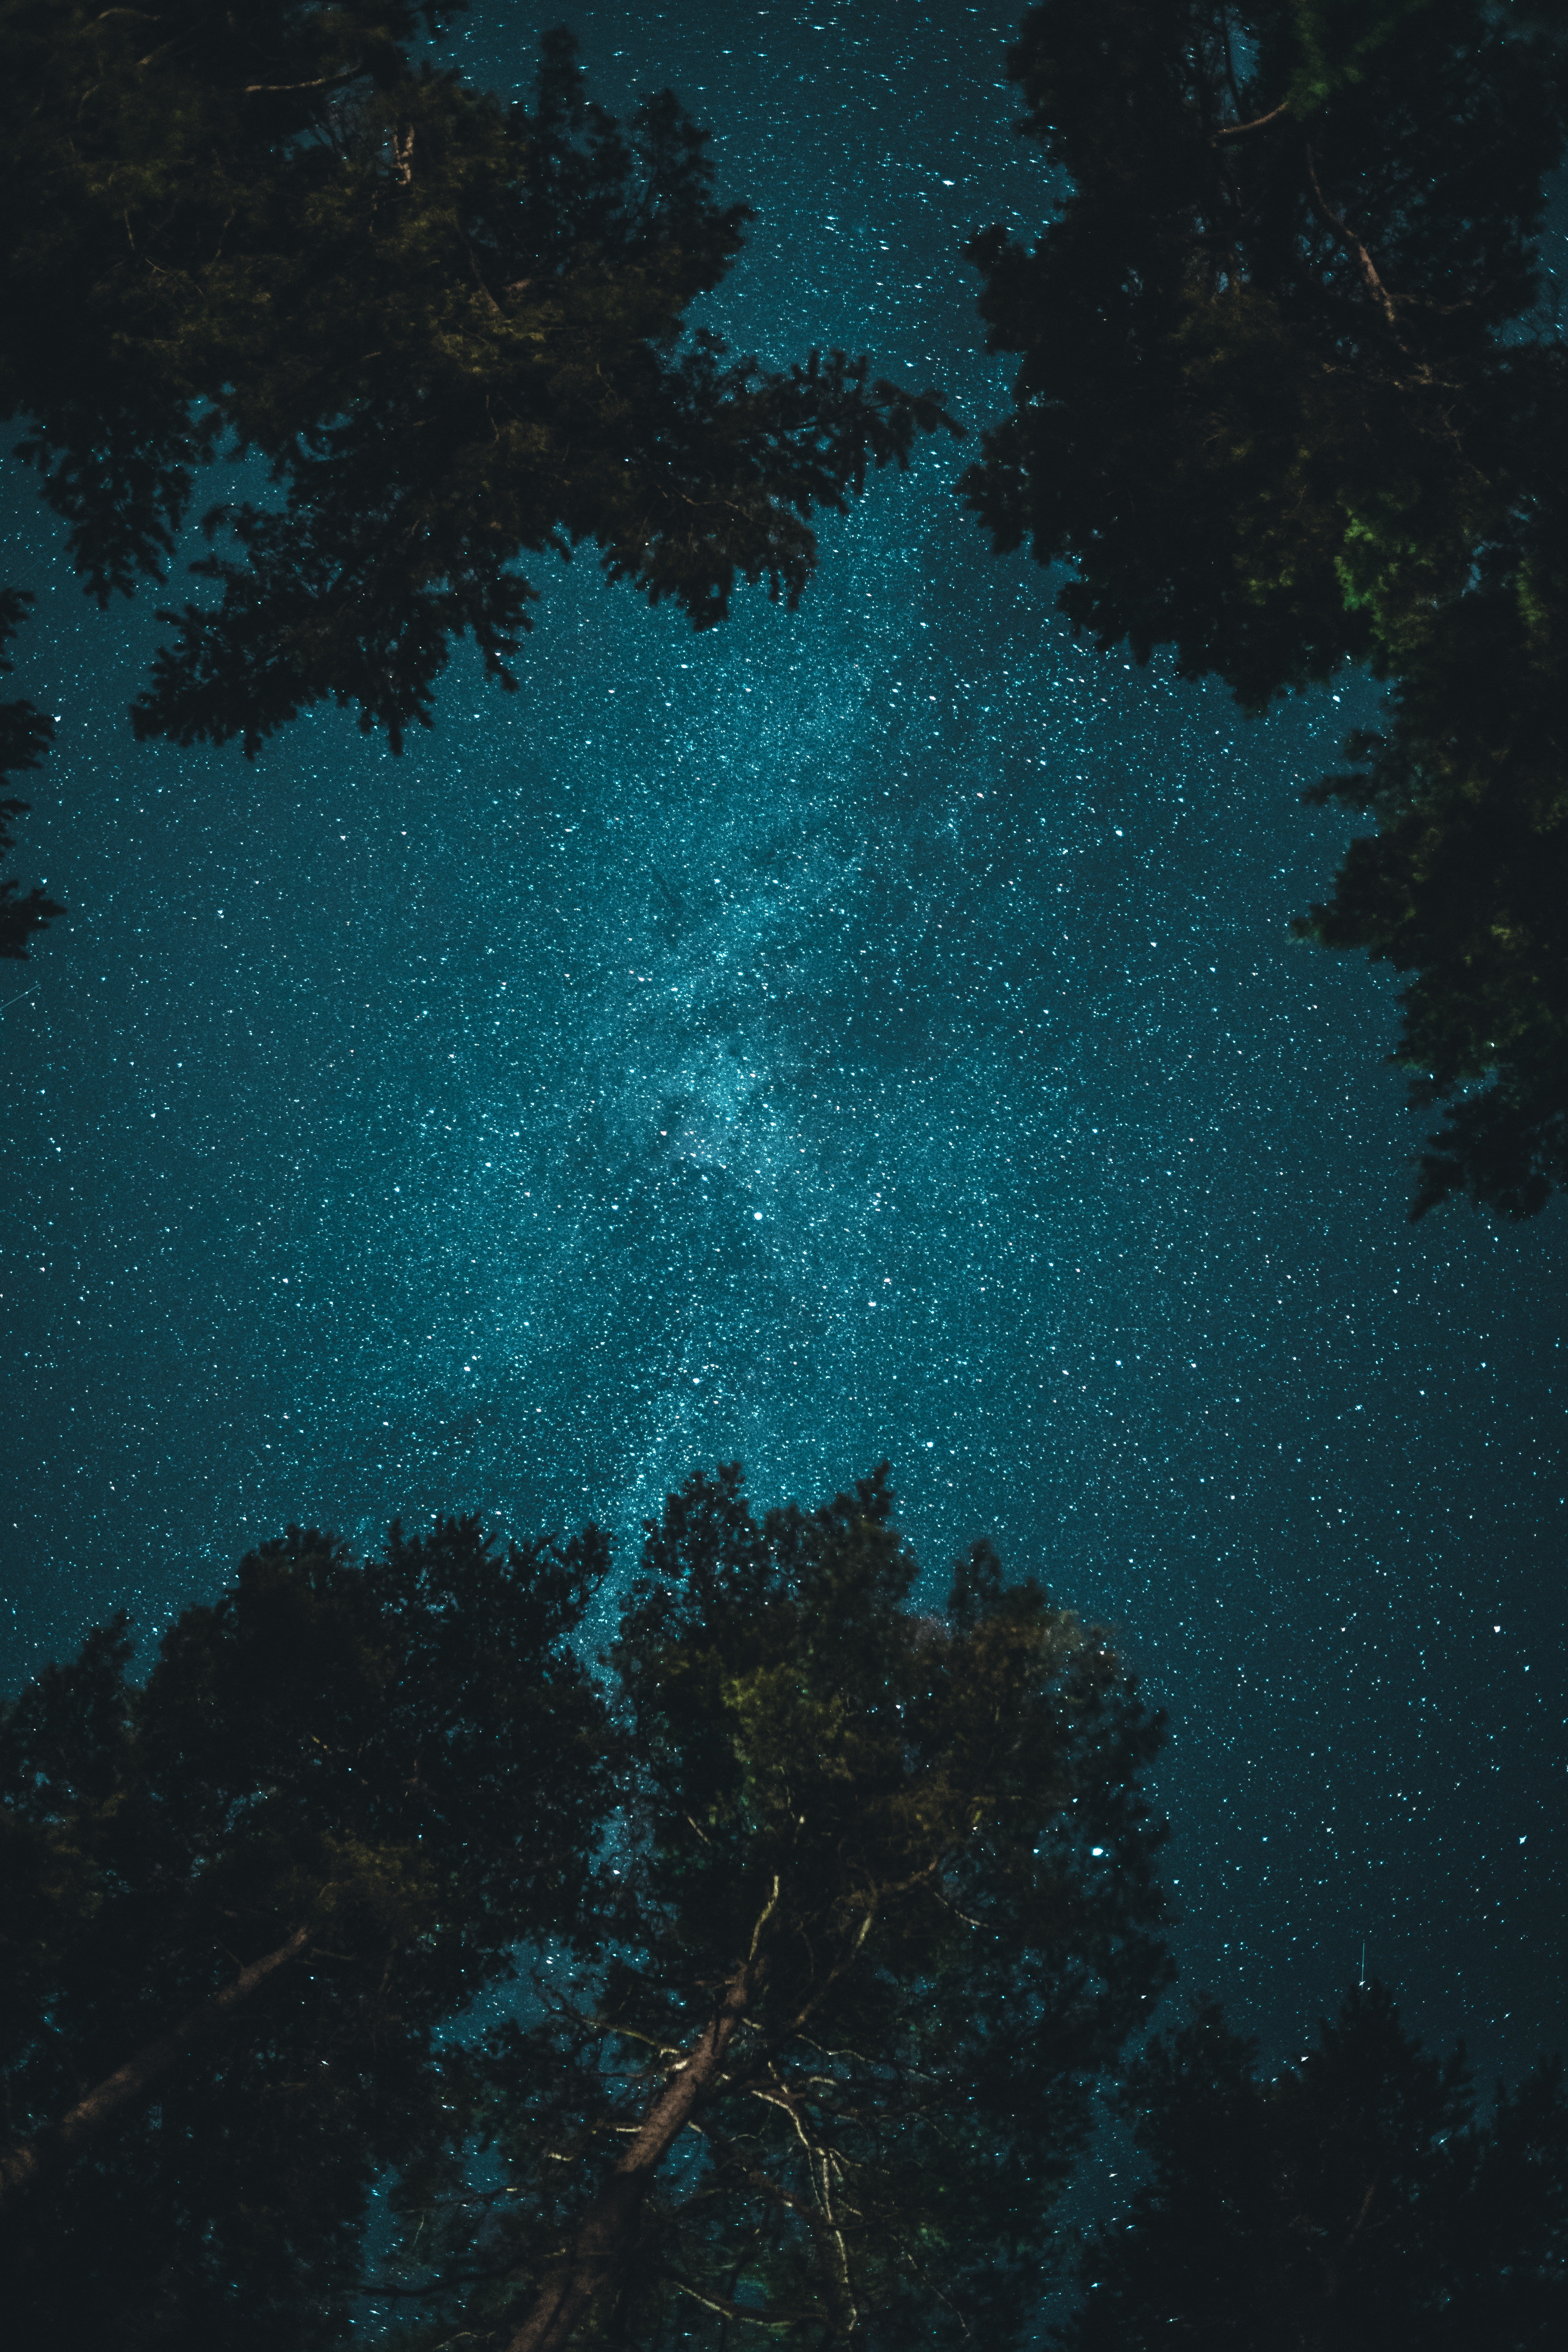 cosmic star wallpaper, starry sky, trees, view from below, night